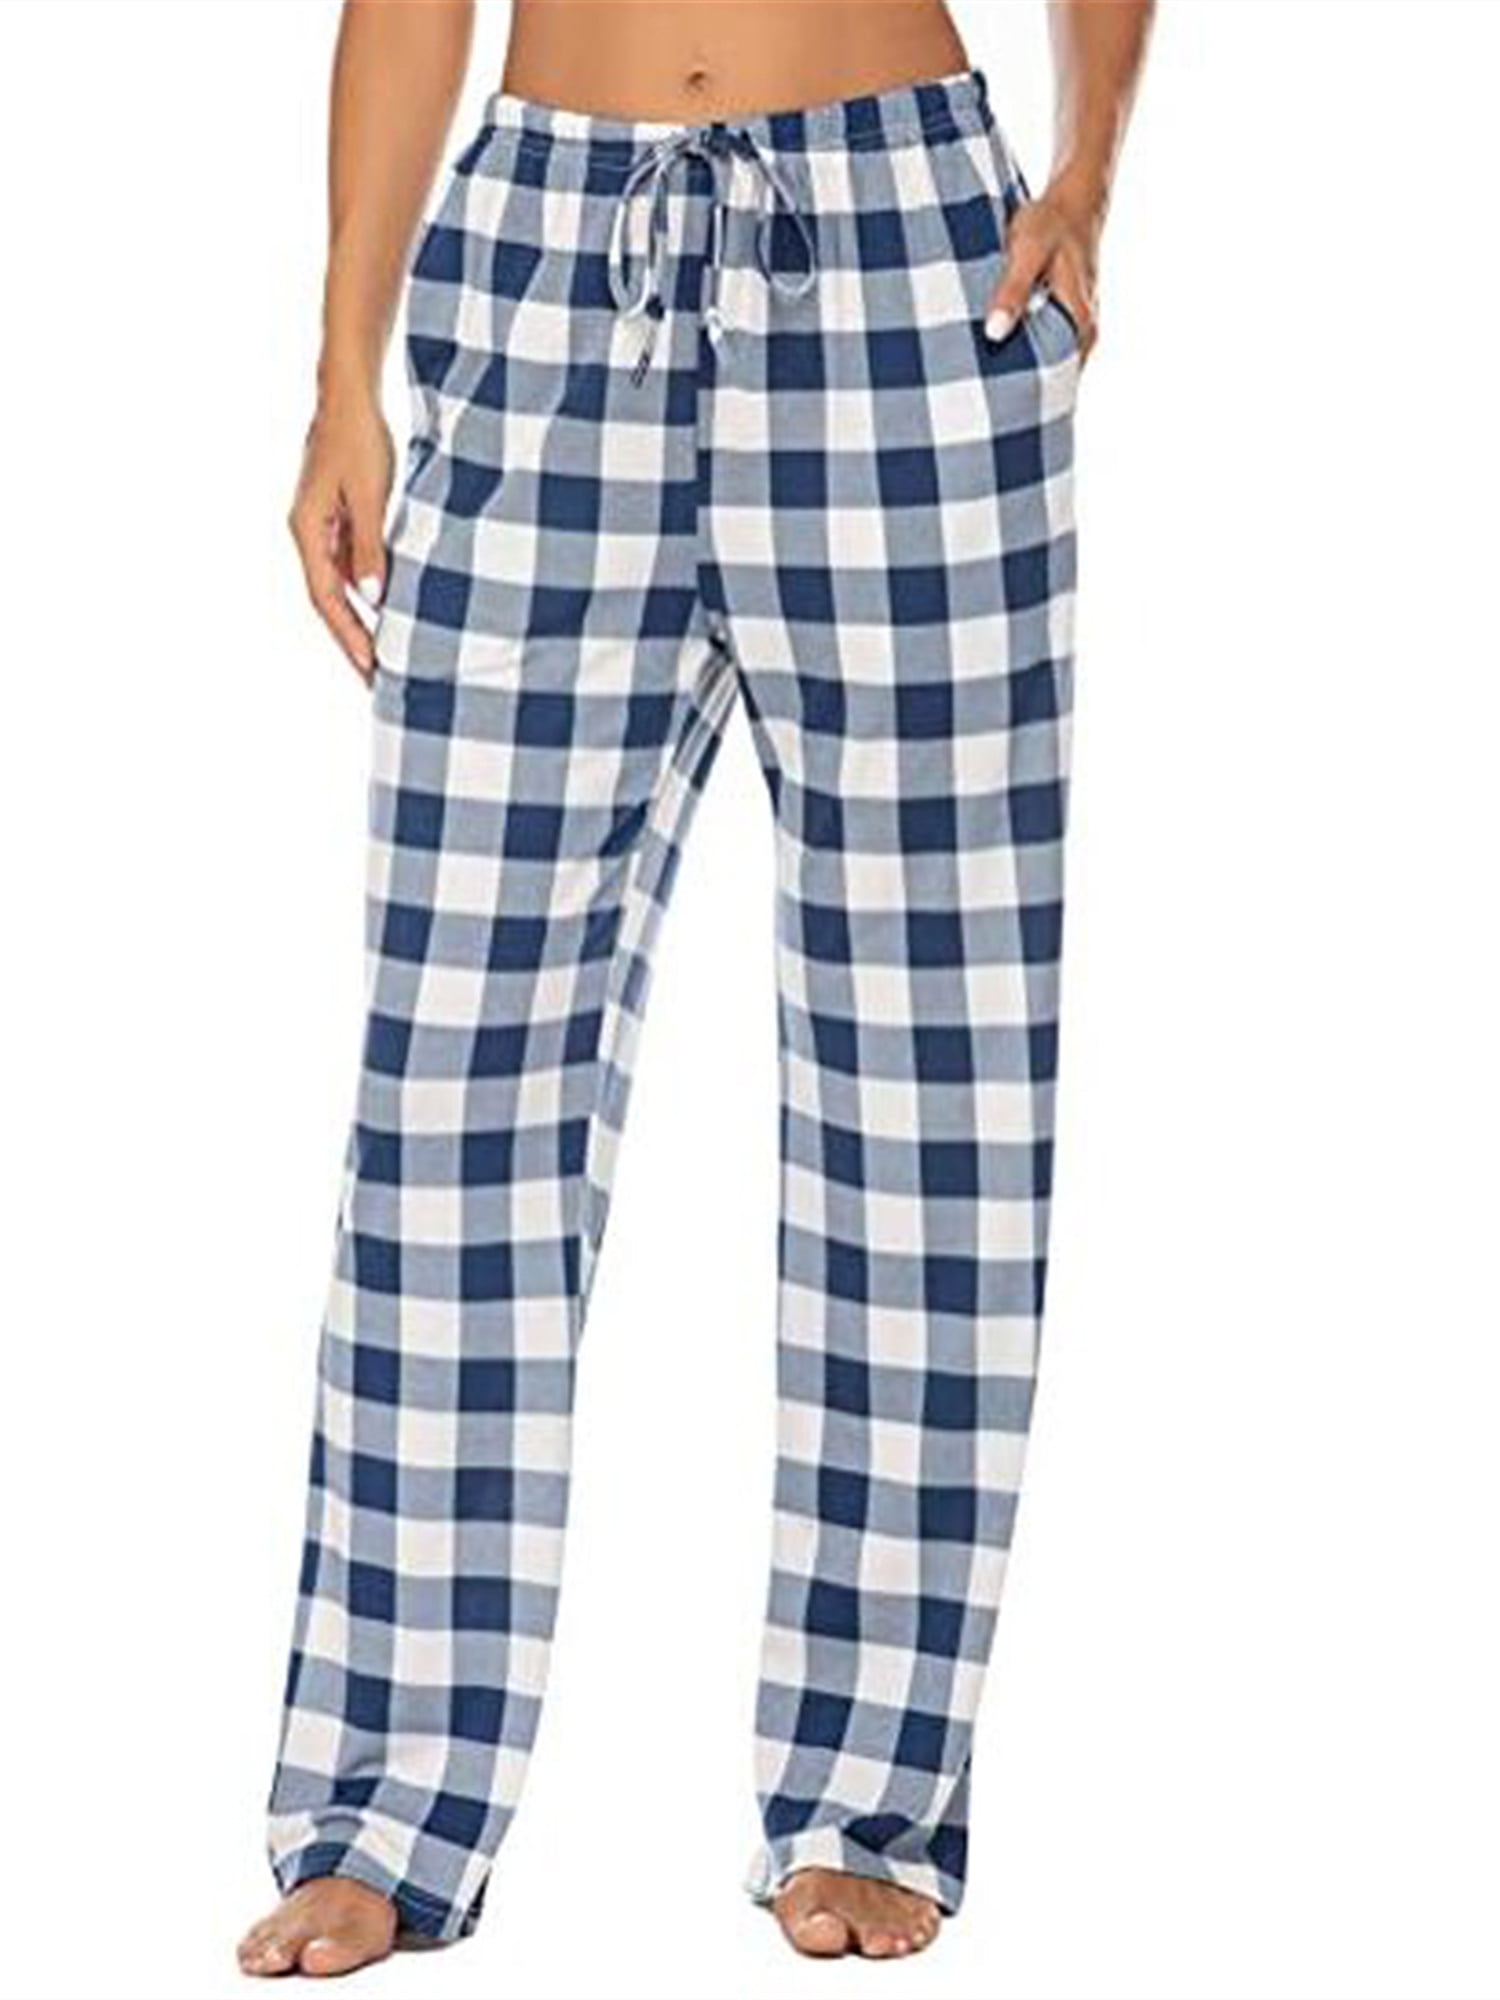 Mens Lounge Pants Pyjama Cotton Bottoms Check Trousers Night Wear Pockets S-XXL 